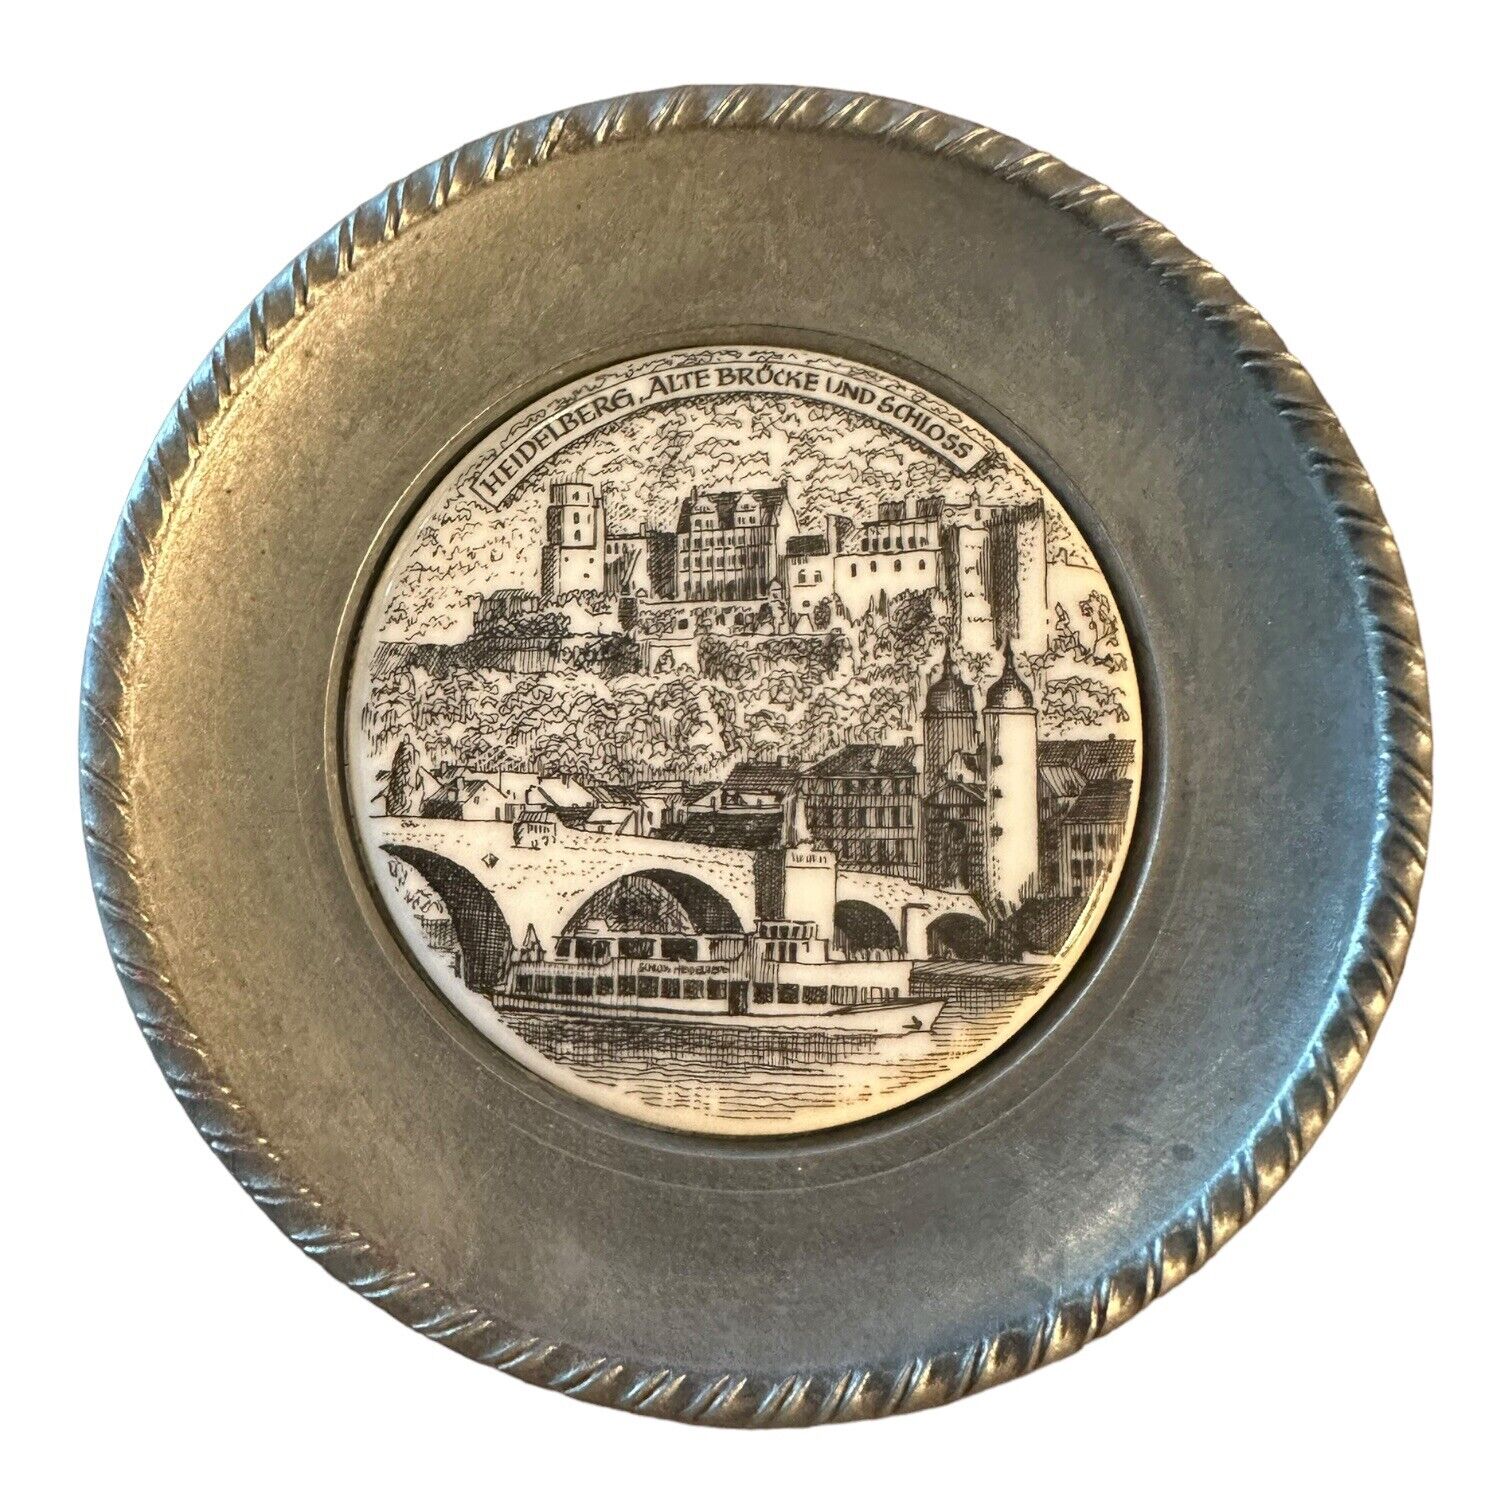 Vintage Heidelberg Alte Brocke Und Schloss miniature souvenir plate Germany